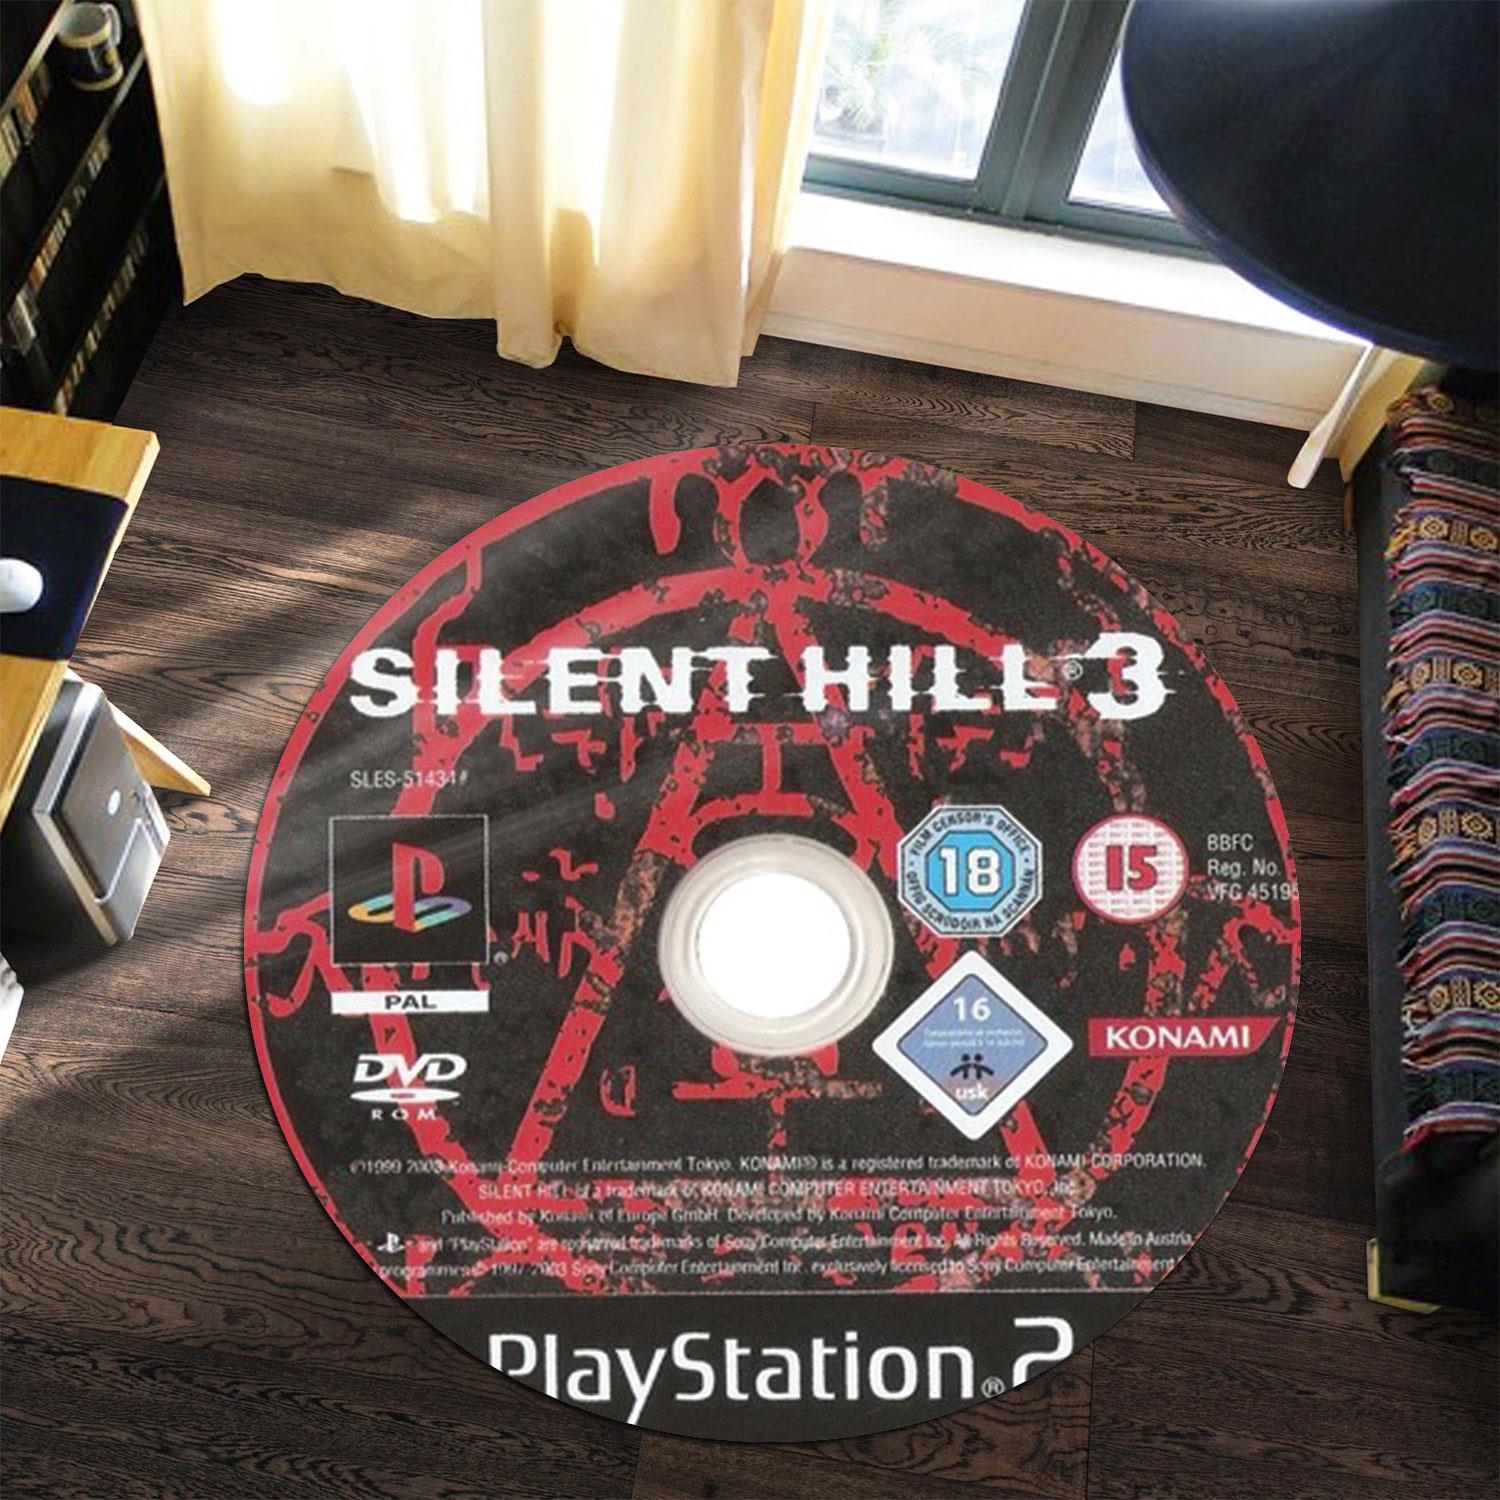 Silent Hill Origins Playstation 2 Disc Round Rug Carpet